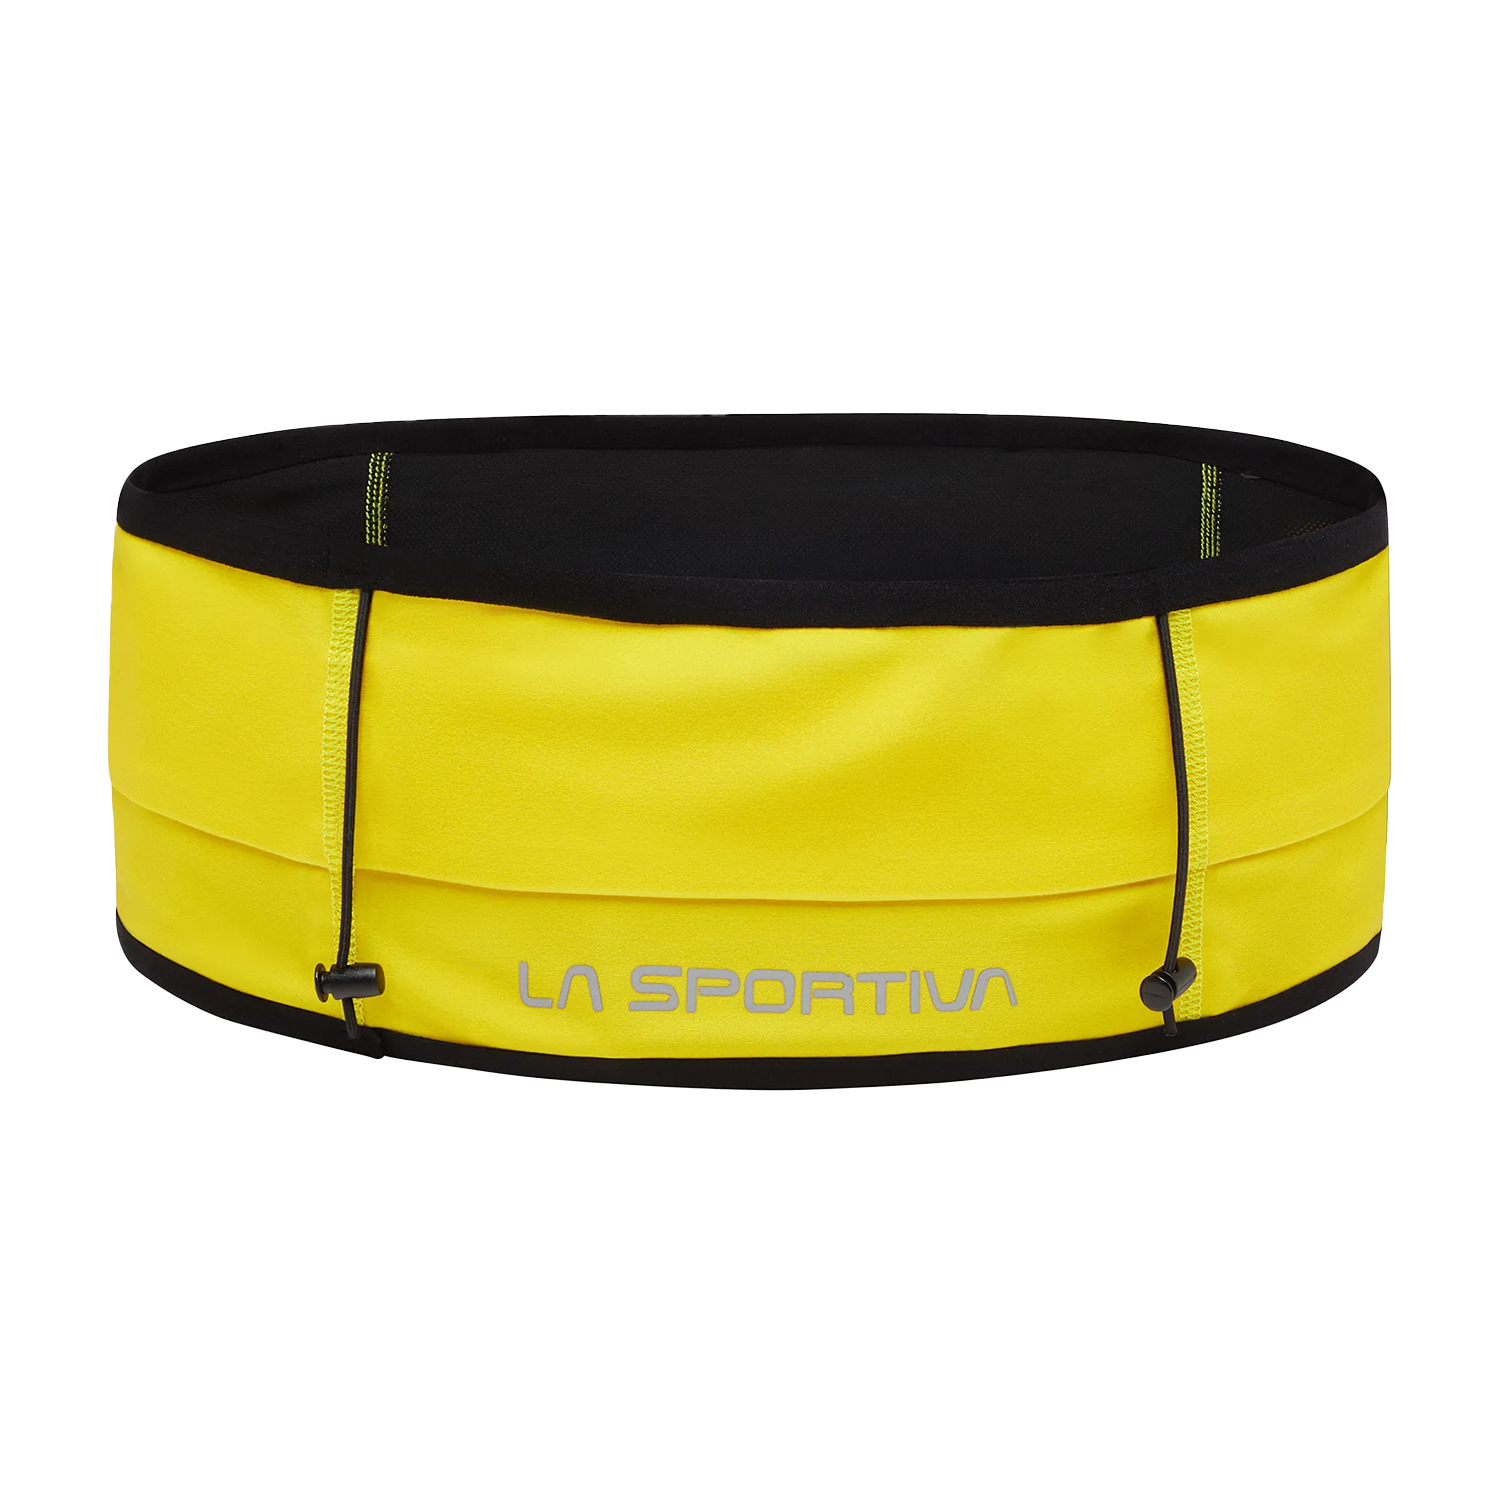 La Sportiva Run Cintura - Yellow